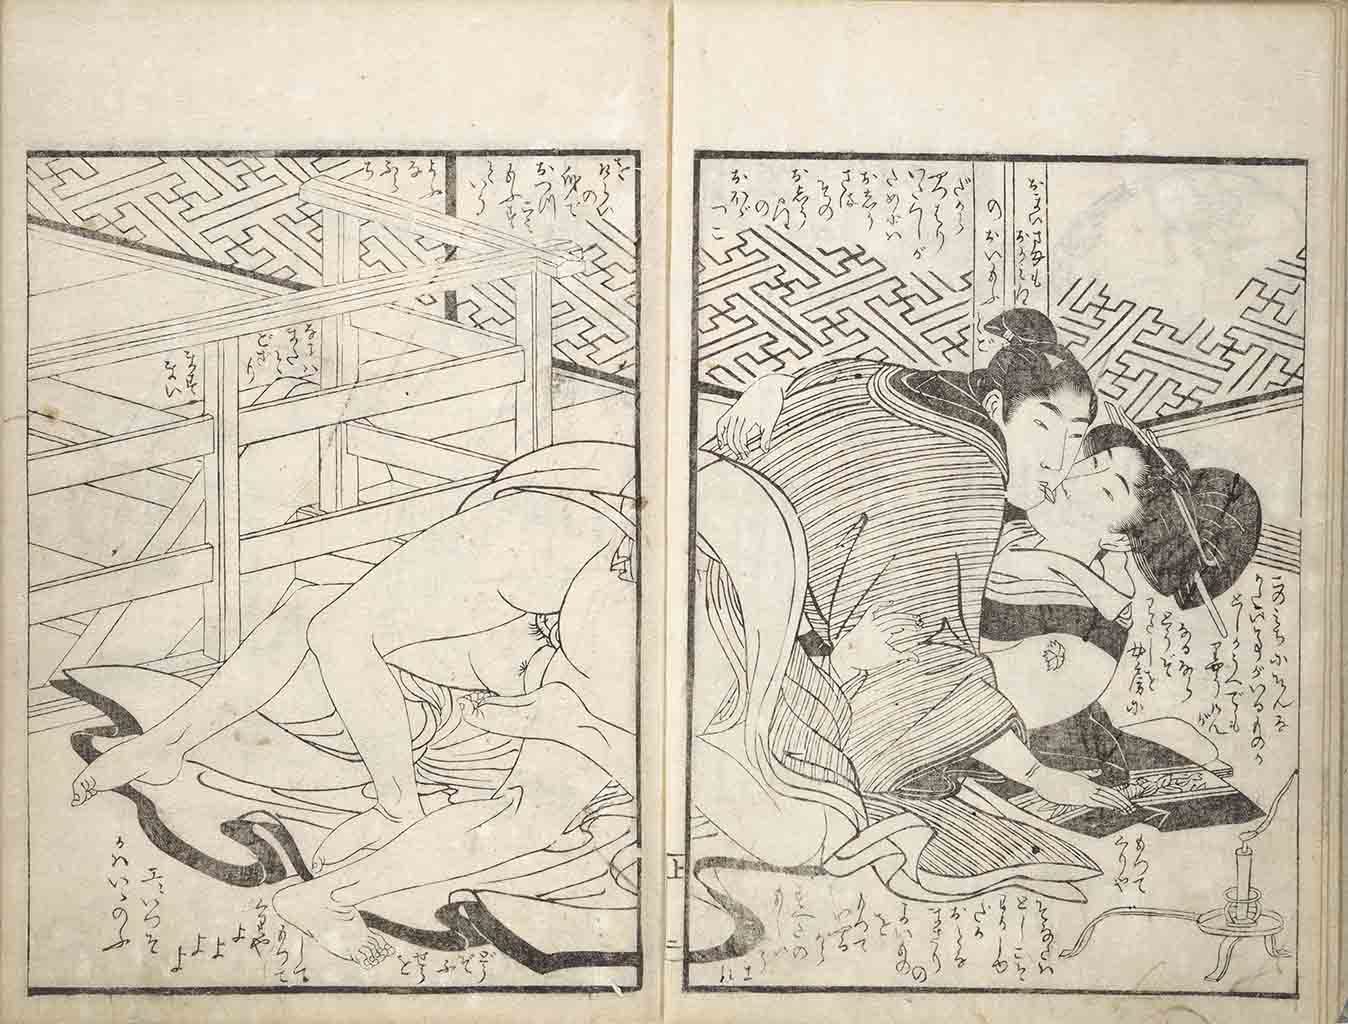 Китагава Утамаро (Kitagawa Utamaro) “Picture Book of the Hitachi Obi“